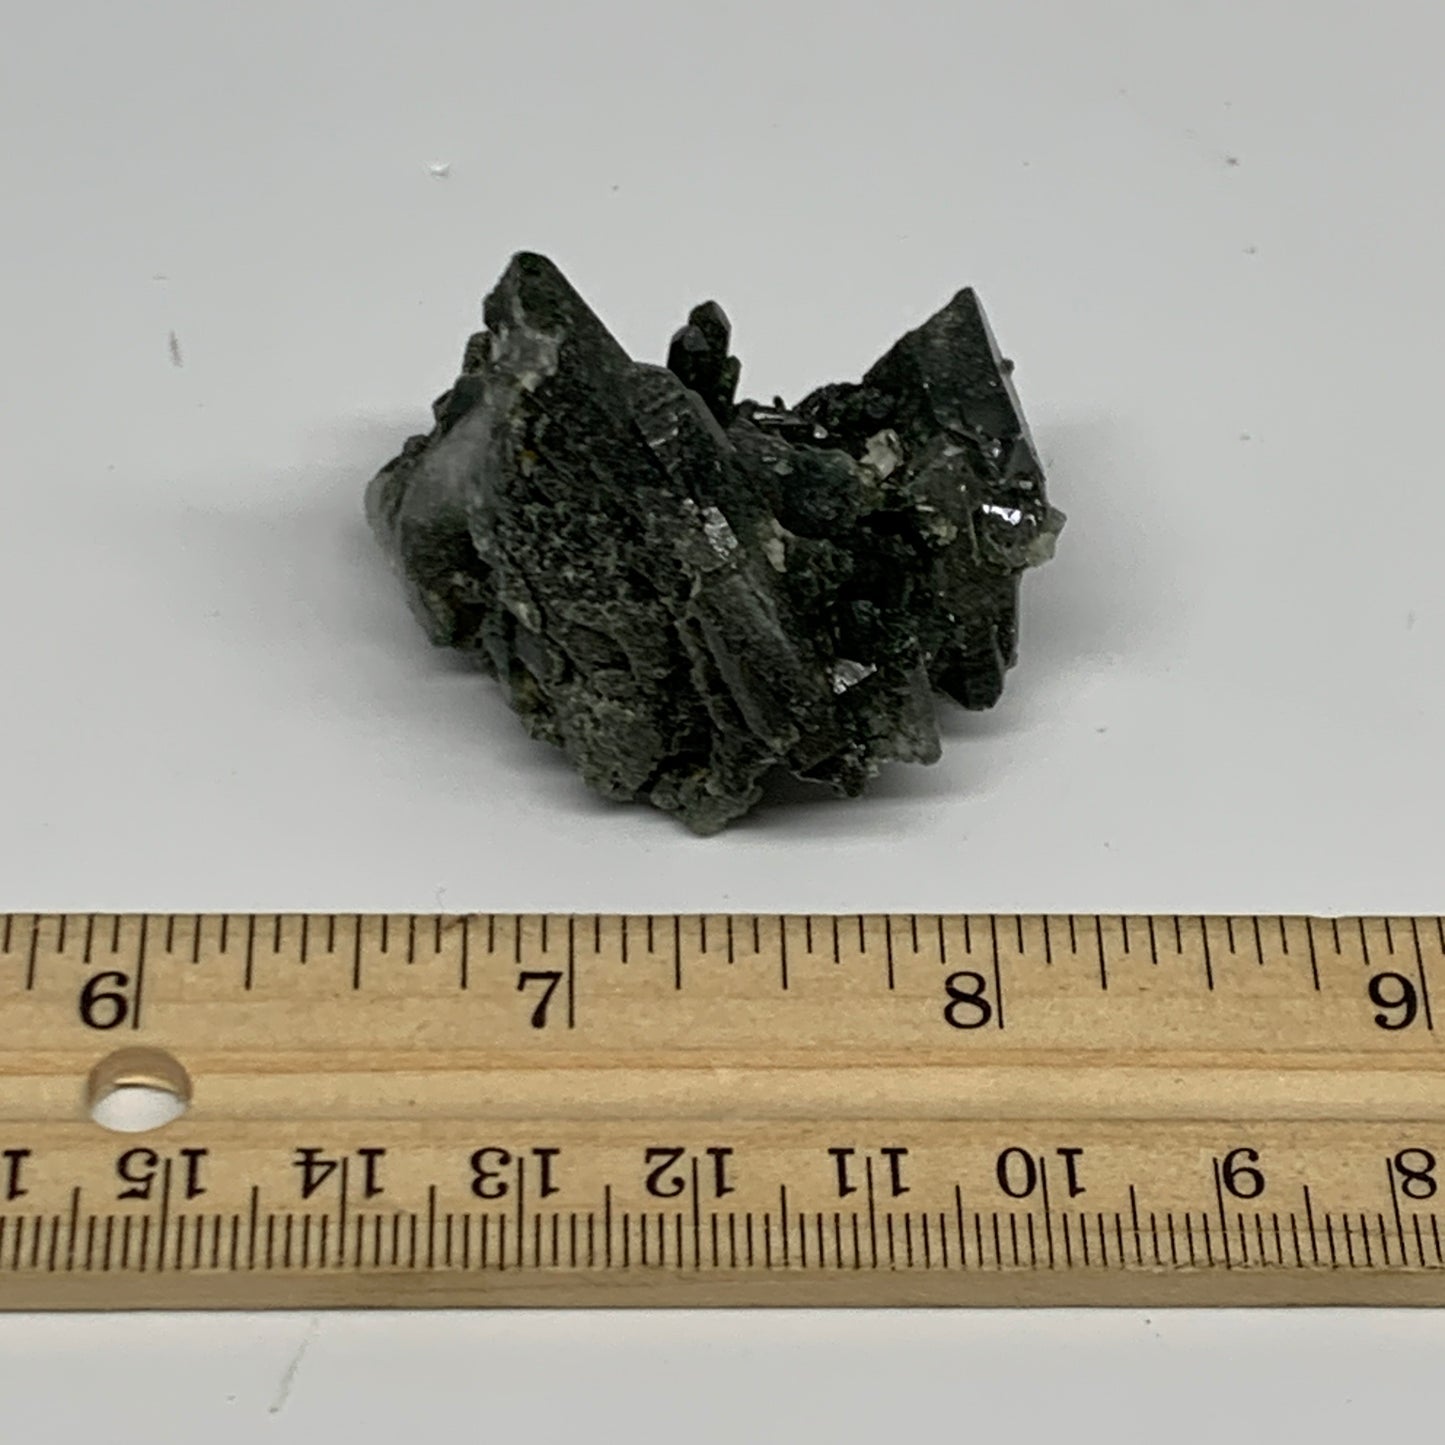 31.6g, 1.6"x1.1"x1.2", Chlorine Quartz Crystal Mineral,Specimen Terminated,B2773